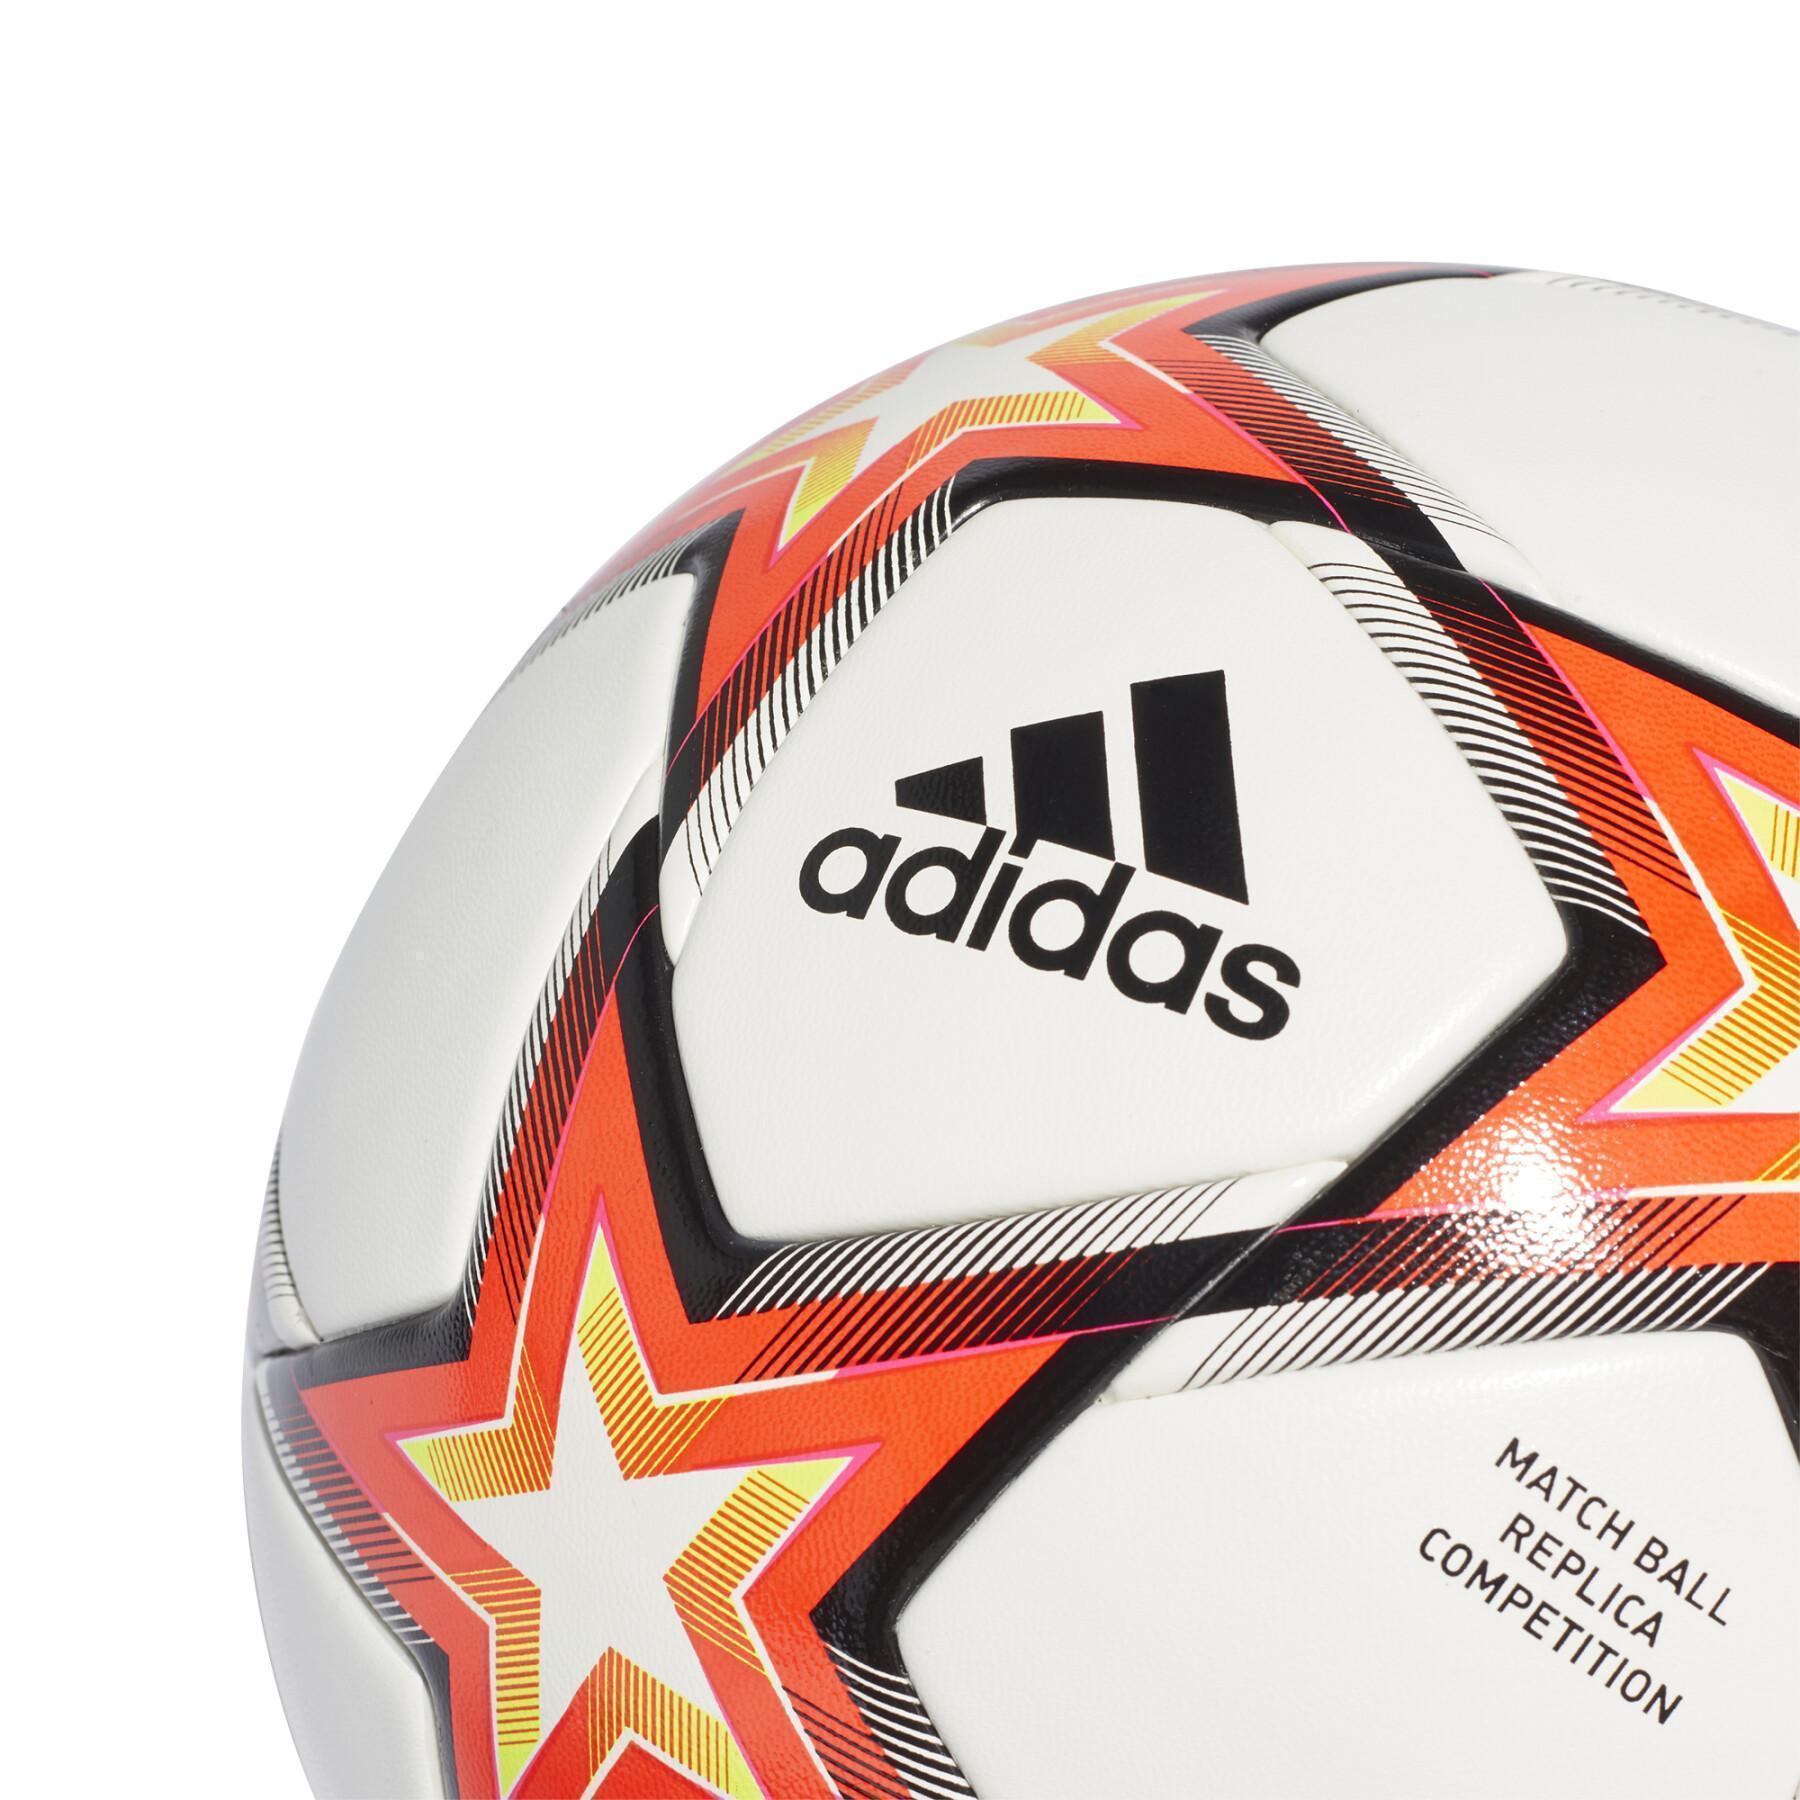 Pallone adidas Champions League Competition Pyrostorm